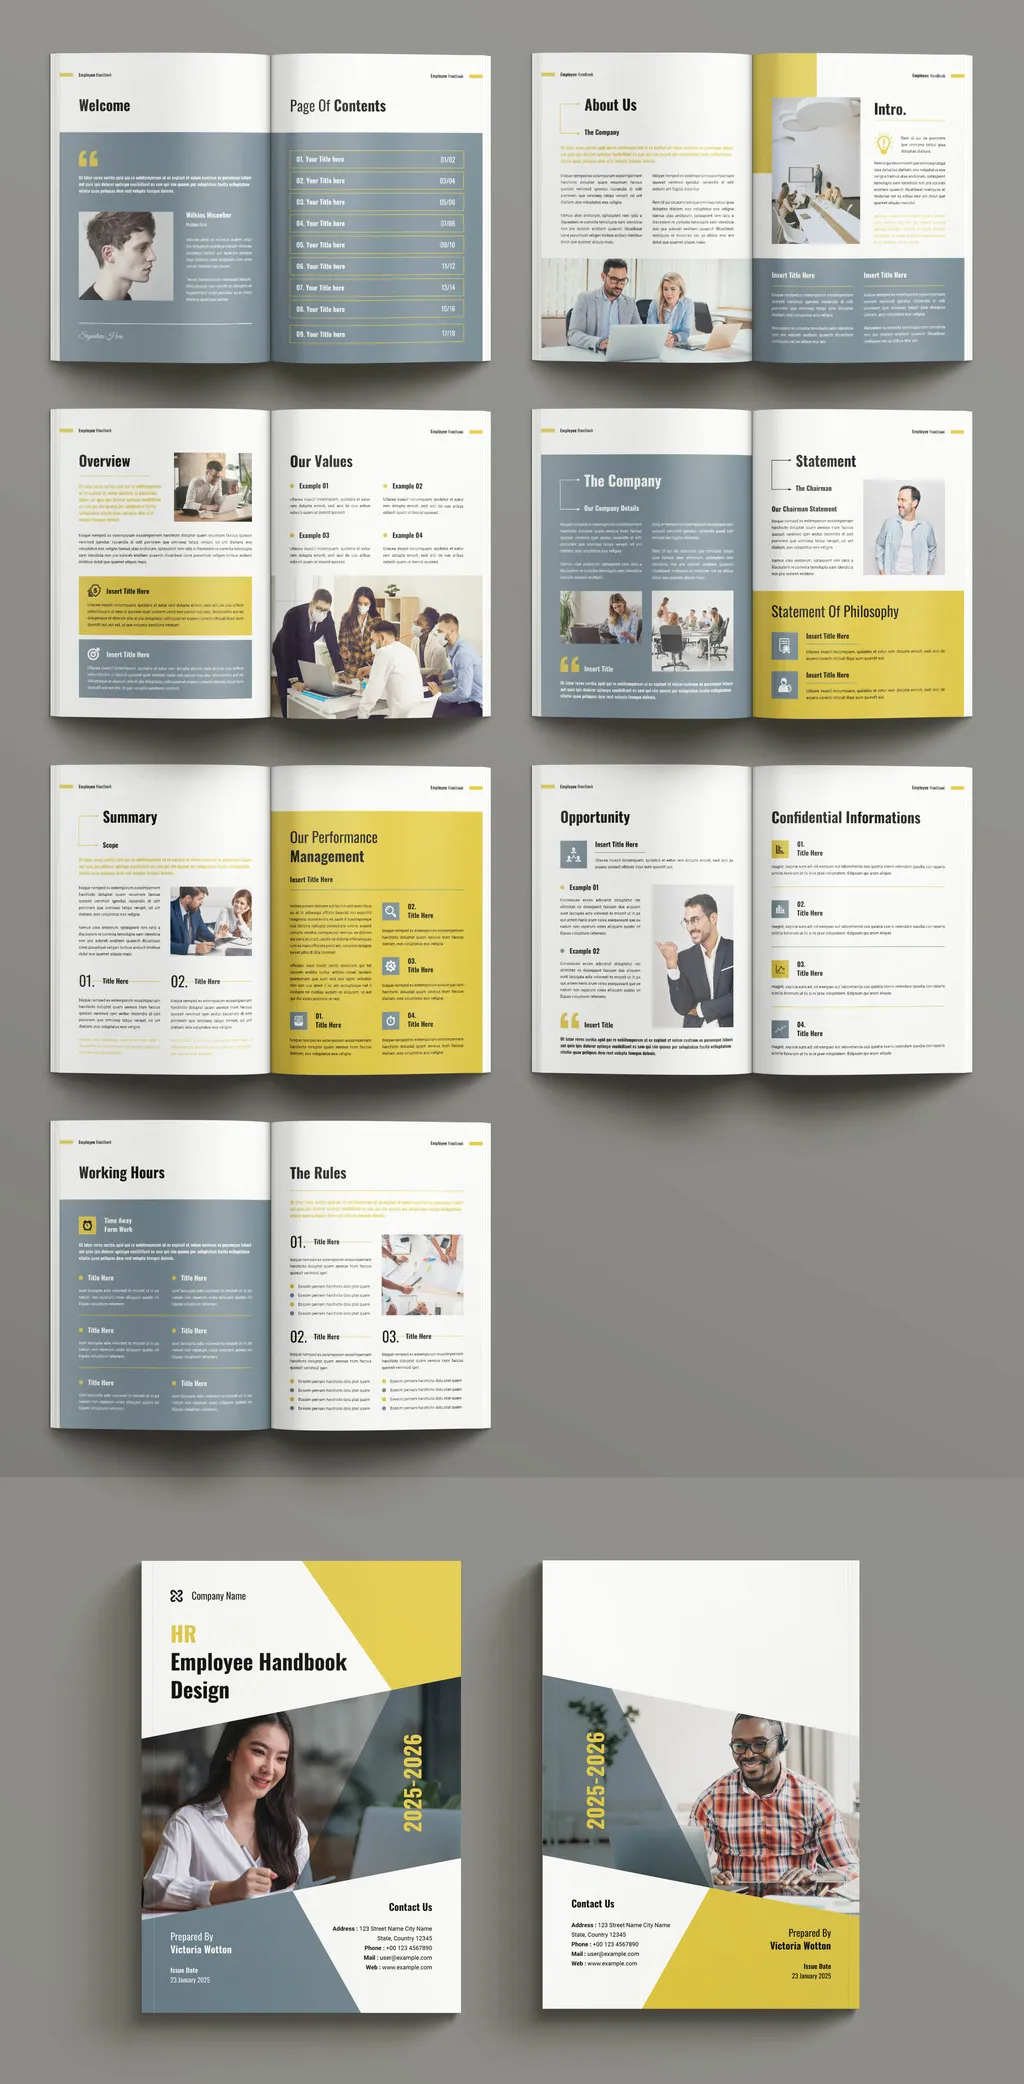 Adobestock - Employee Handbook Layout Design Template 721256748